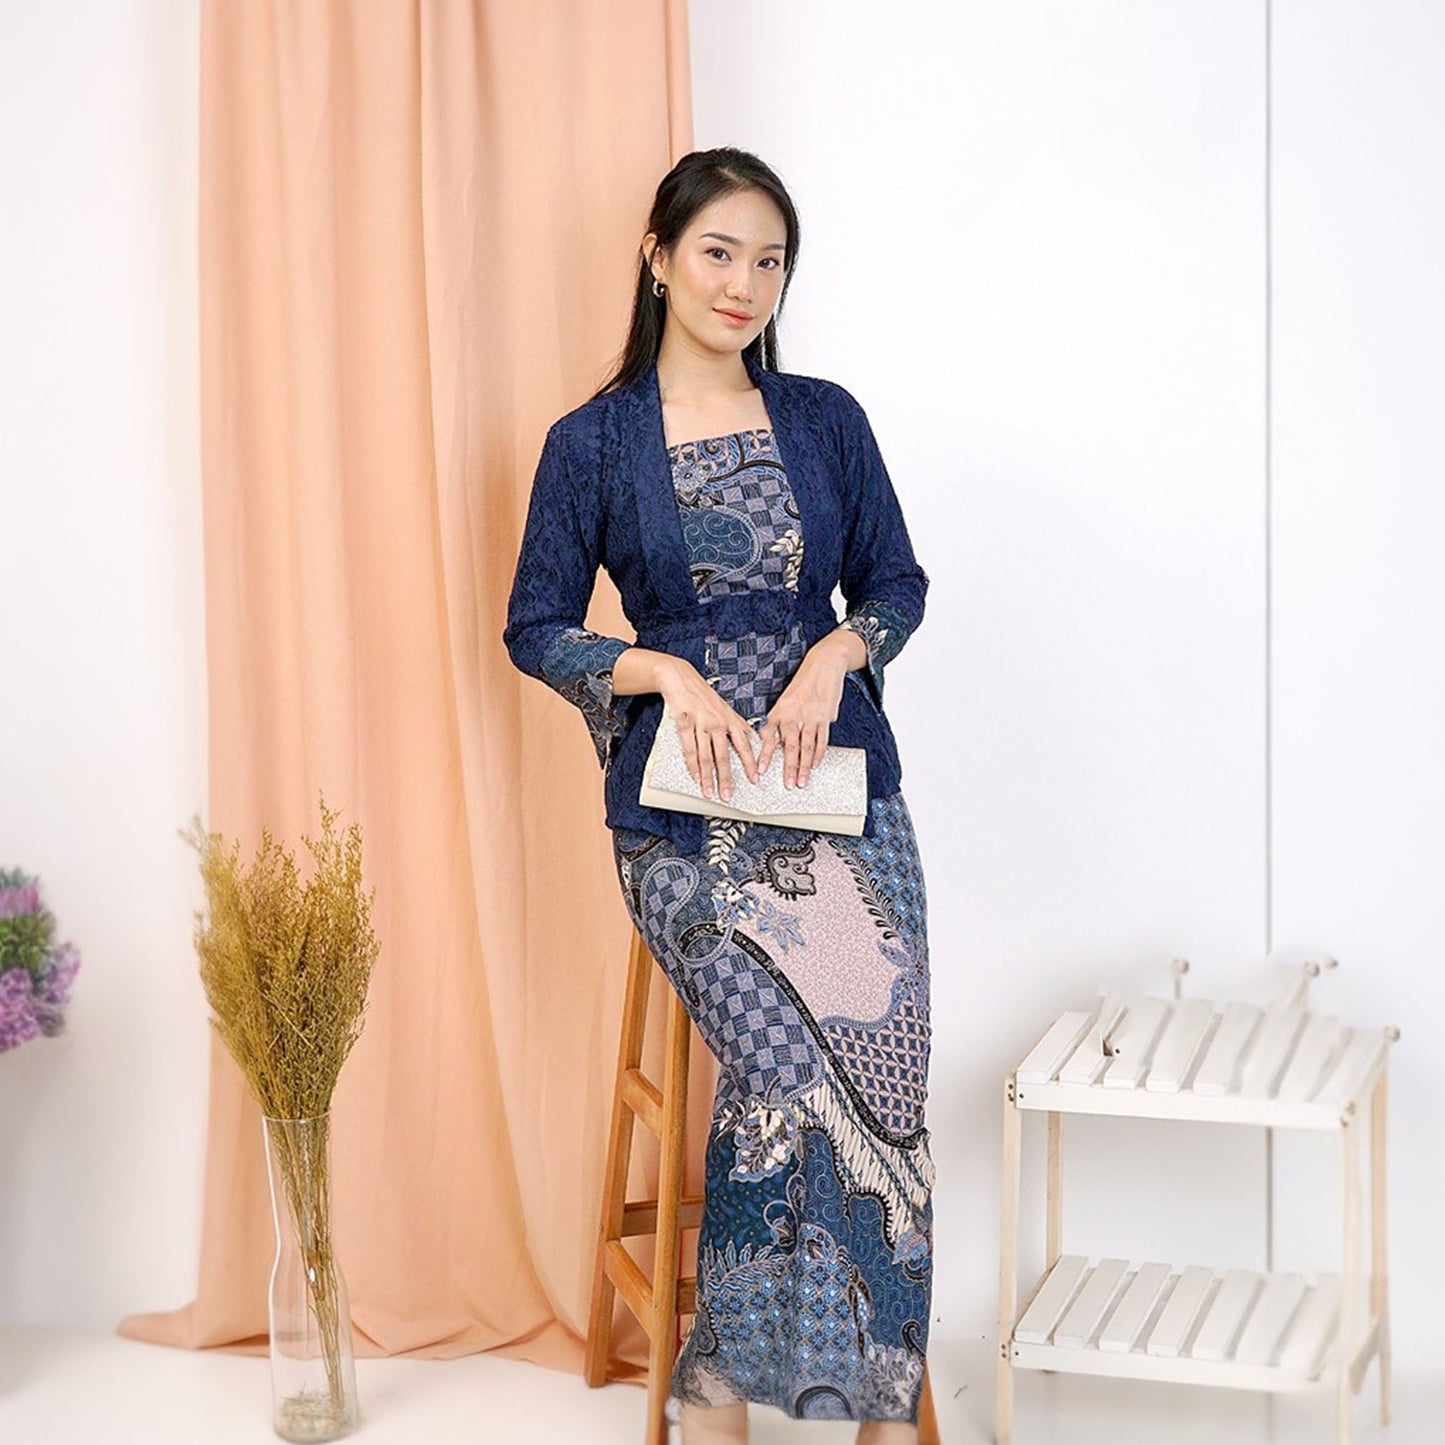 Contemporary Elnira Brocade Kebaya Set Latest Batik Patterned Skirt And Blouse